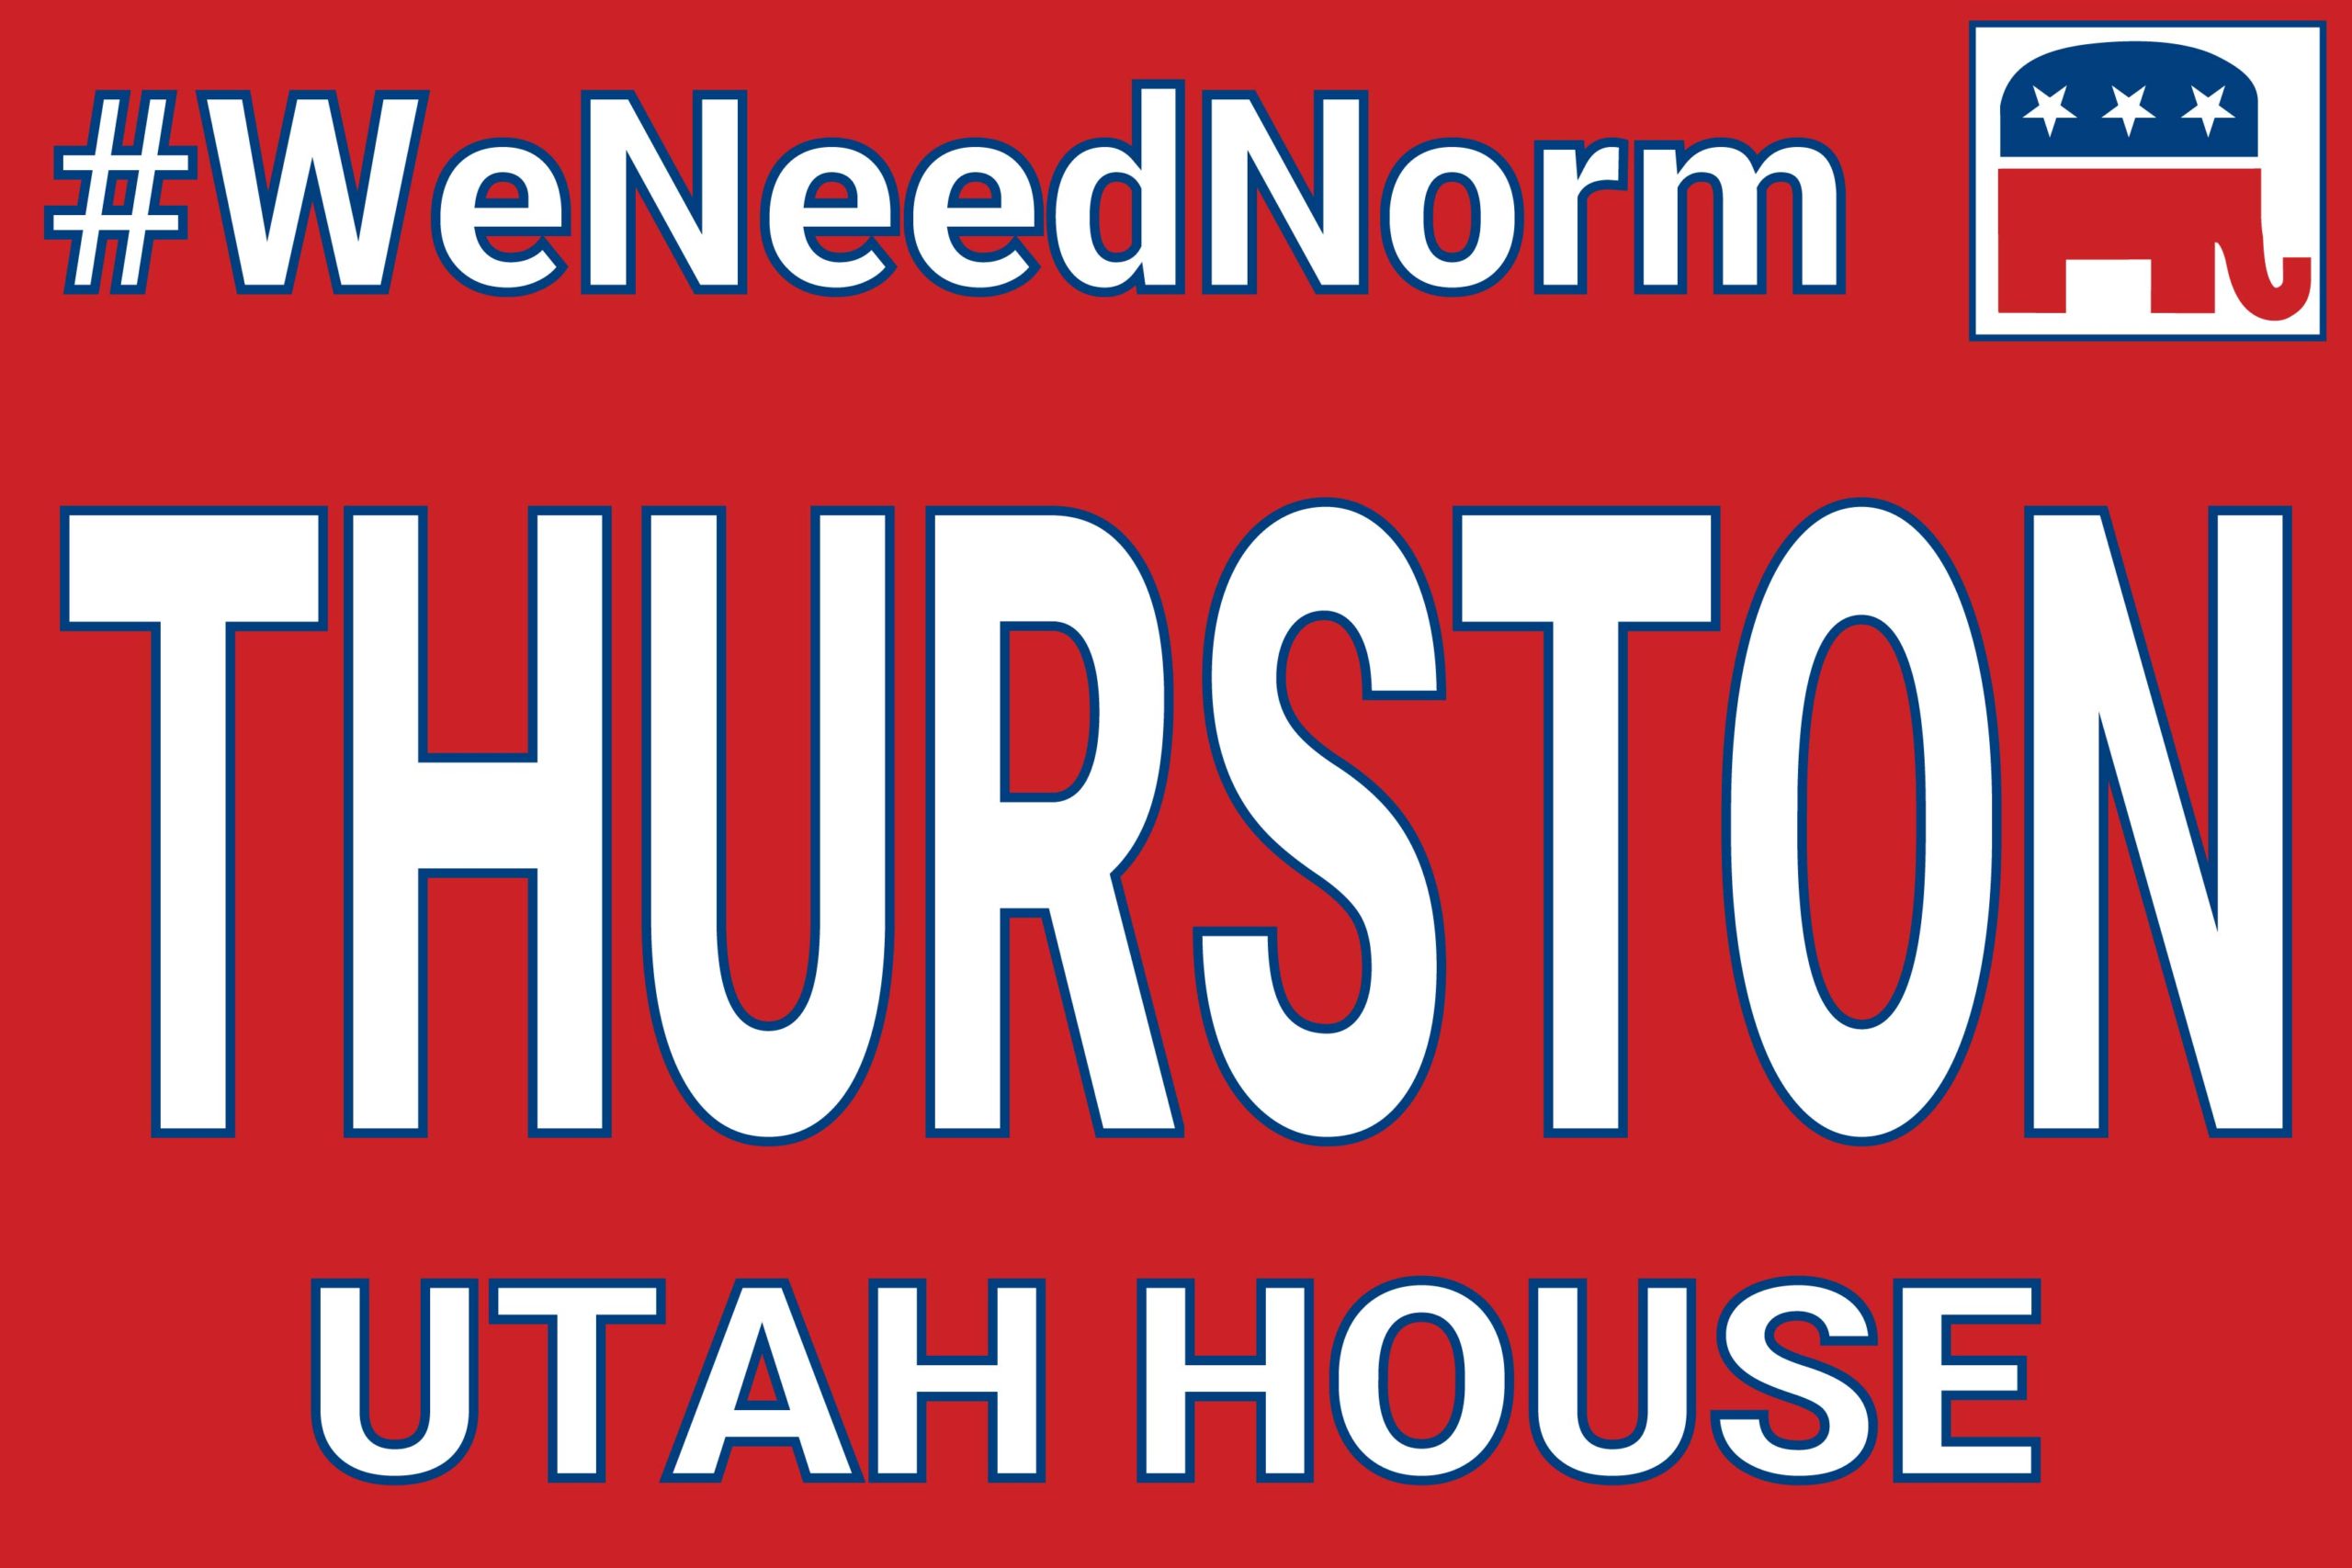 Norm Thurston Utah House #WeNeedNorm